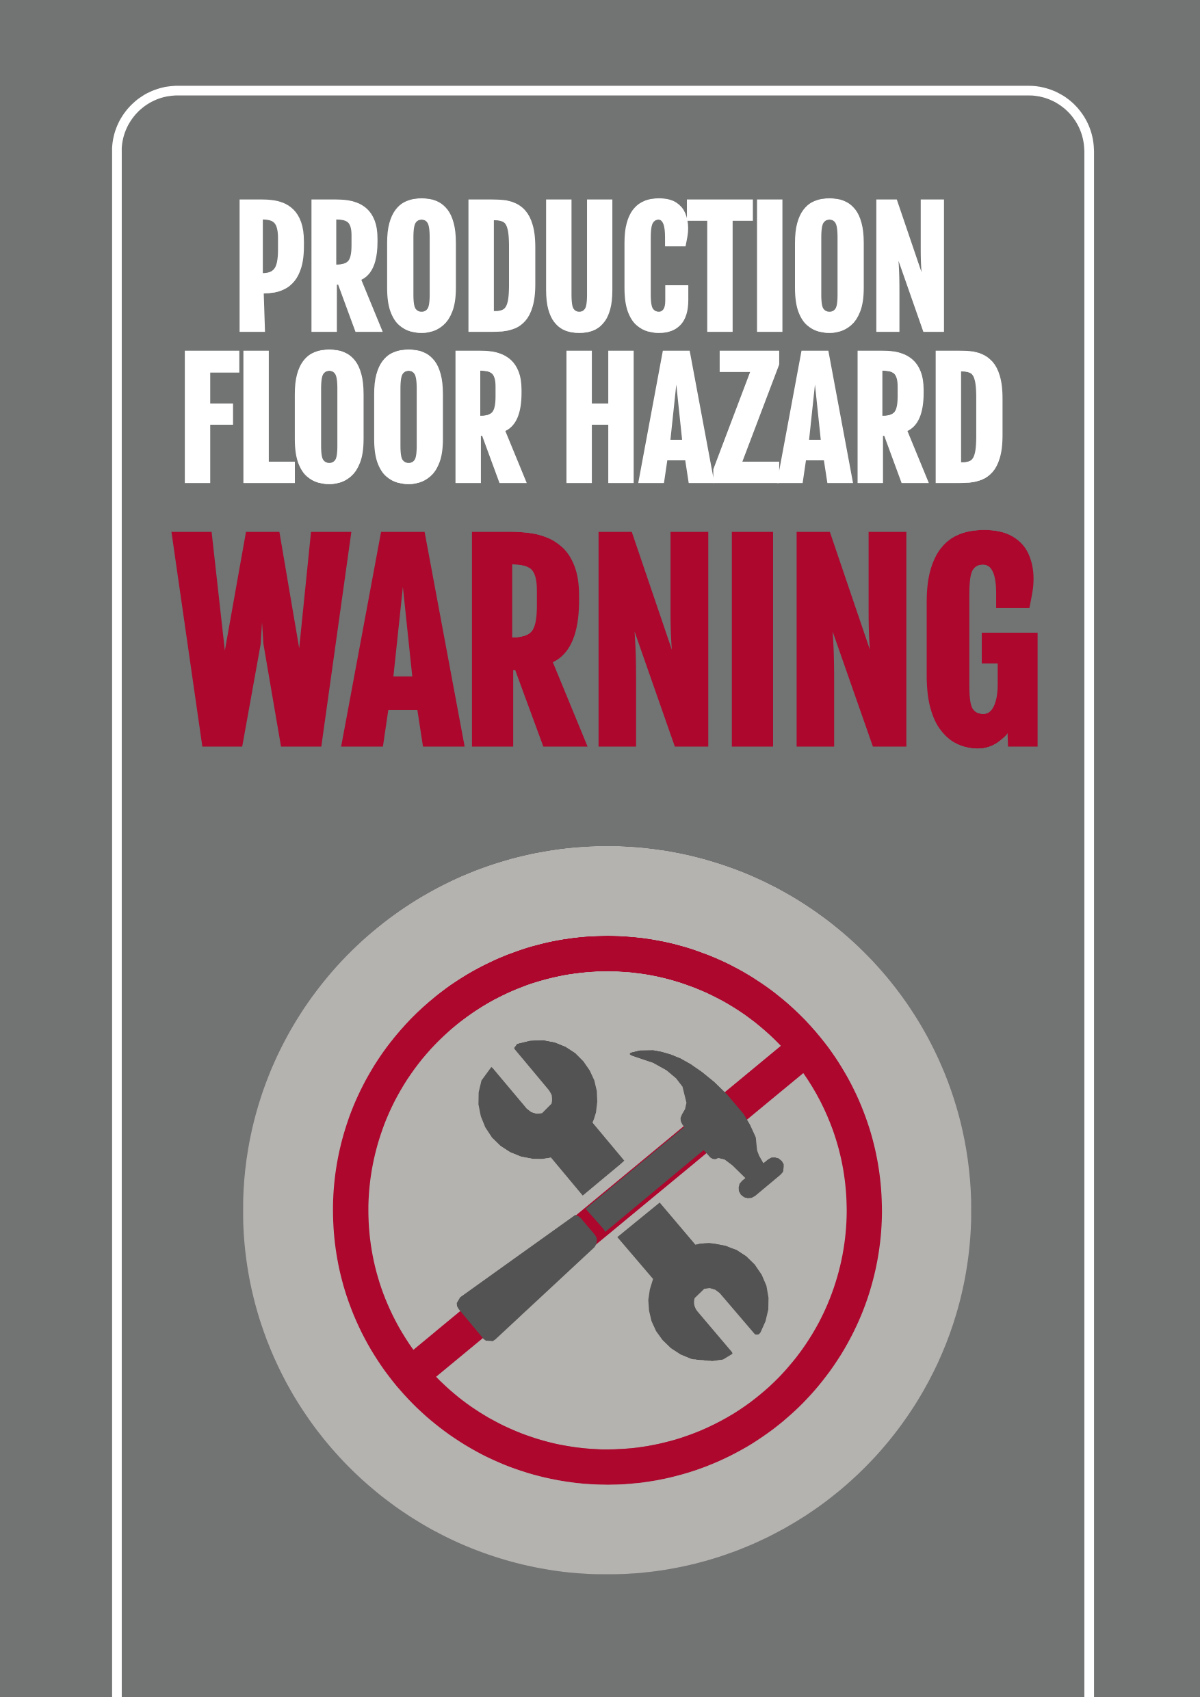 Production Floor Hazard Warning Signage Template